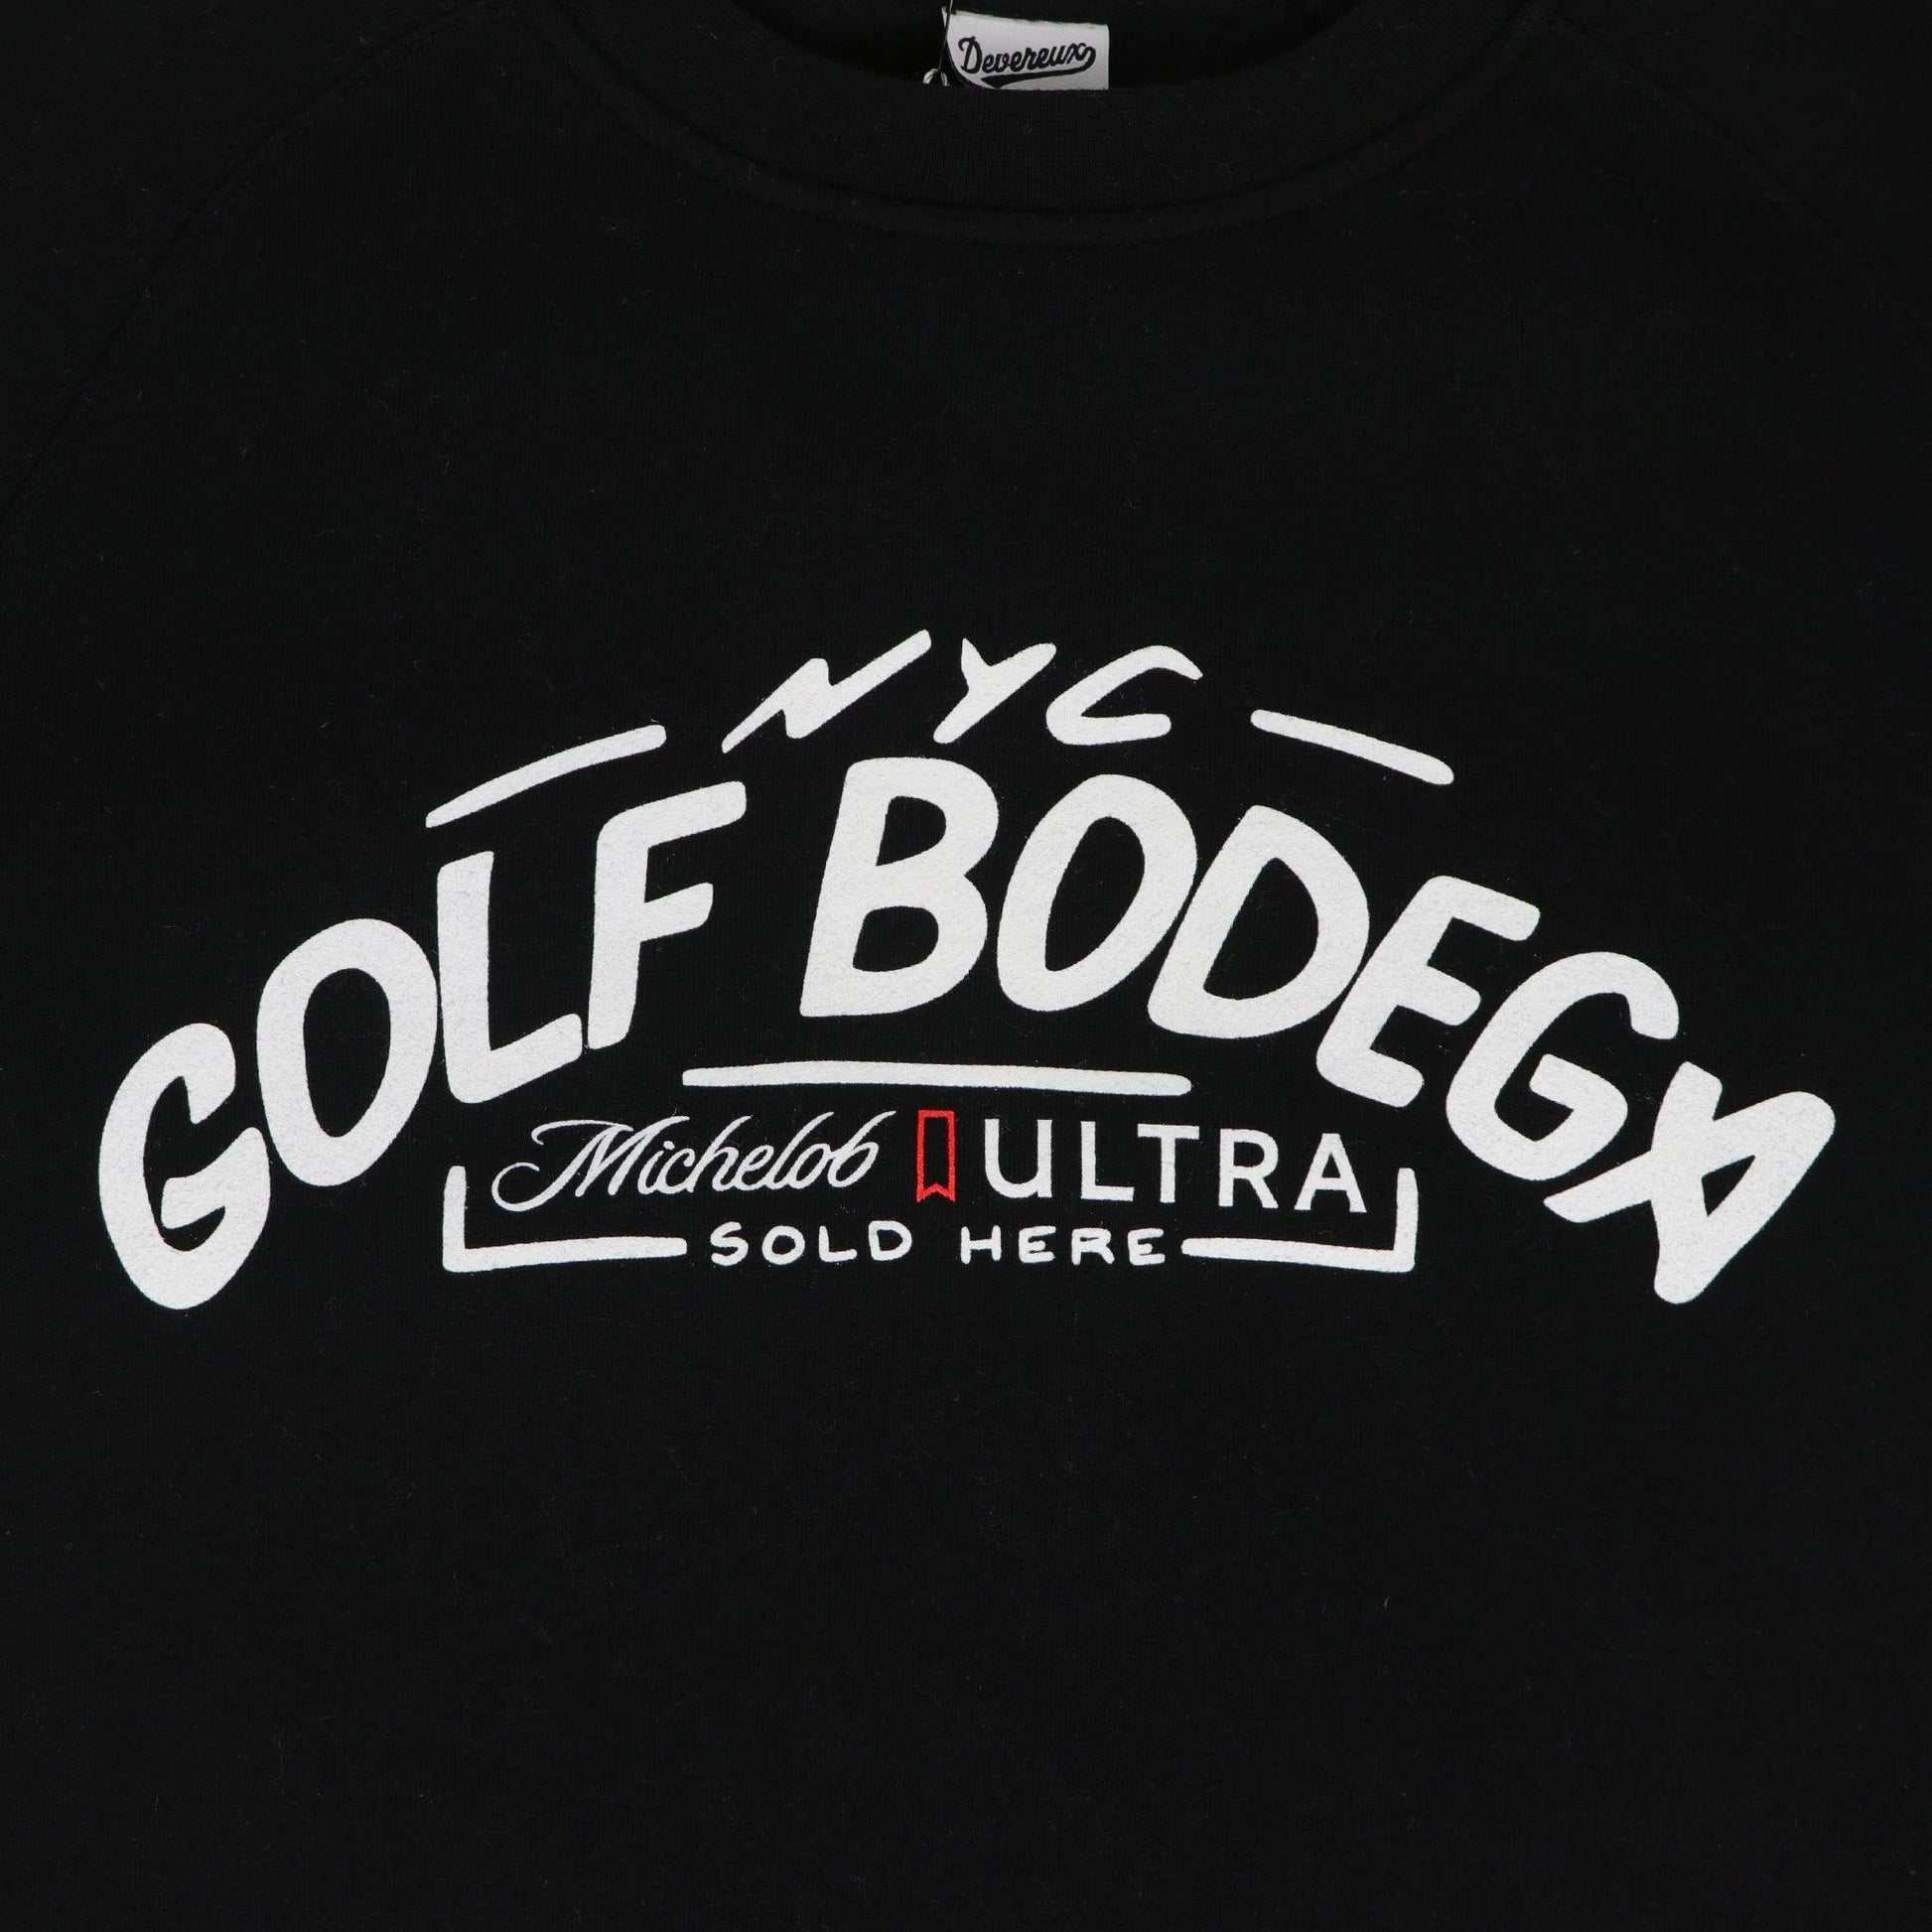 Close up of Golf Bodega logo in white